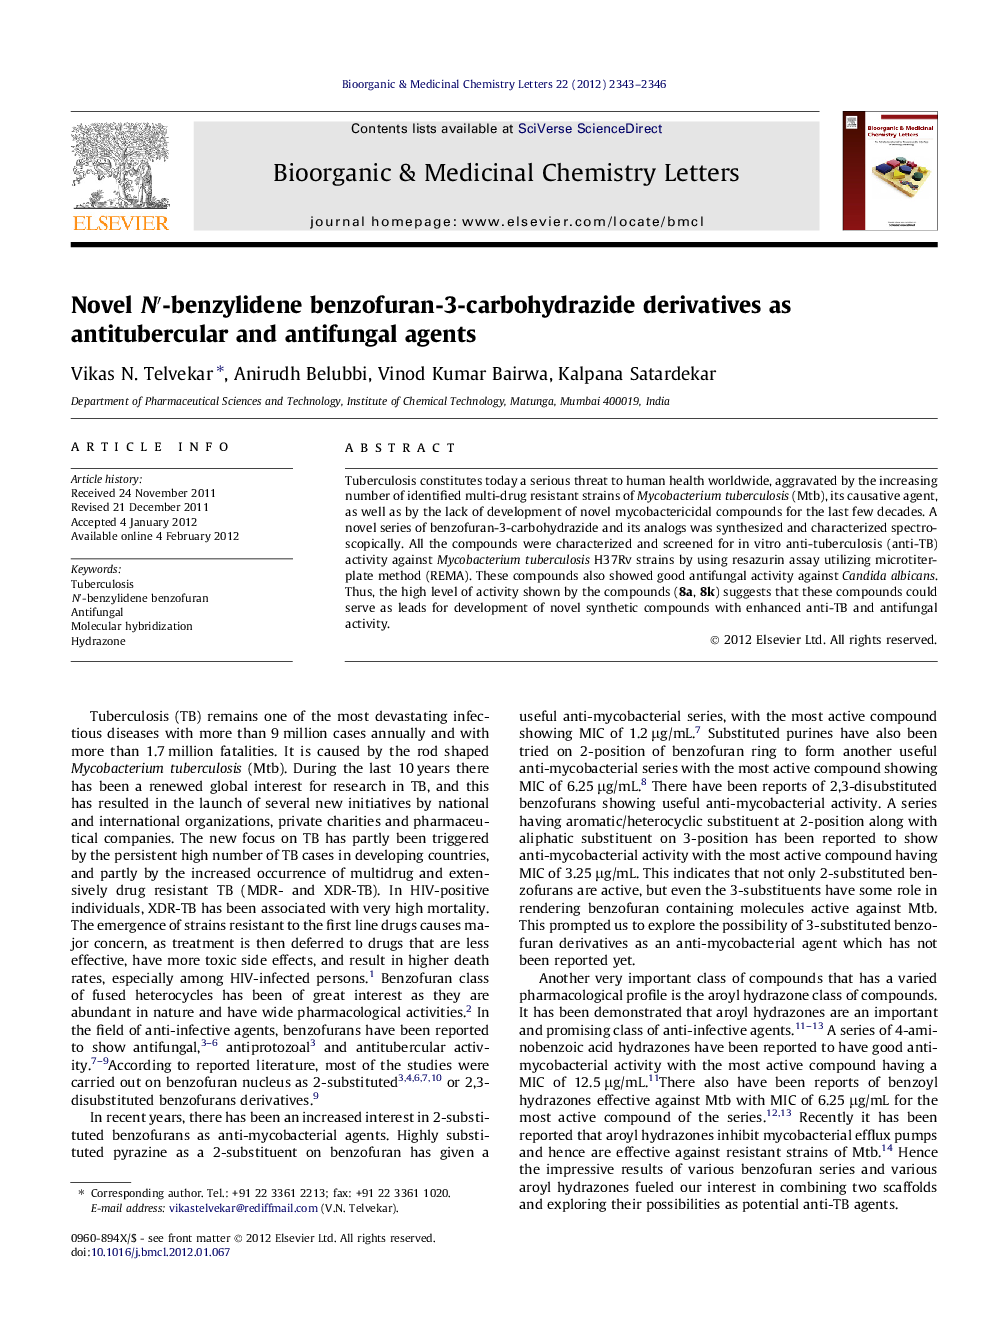 Novel N′-benzylidene benzofuran-3-carbohydrazide derivatives as antitubercular and antifungal agents